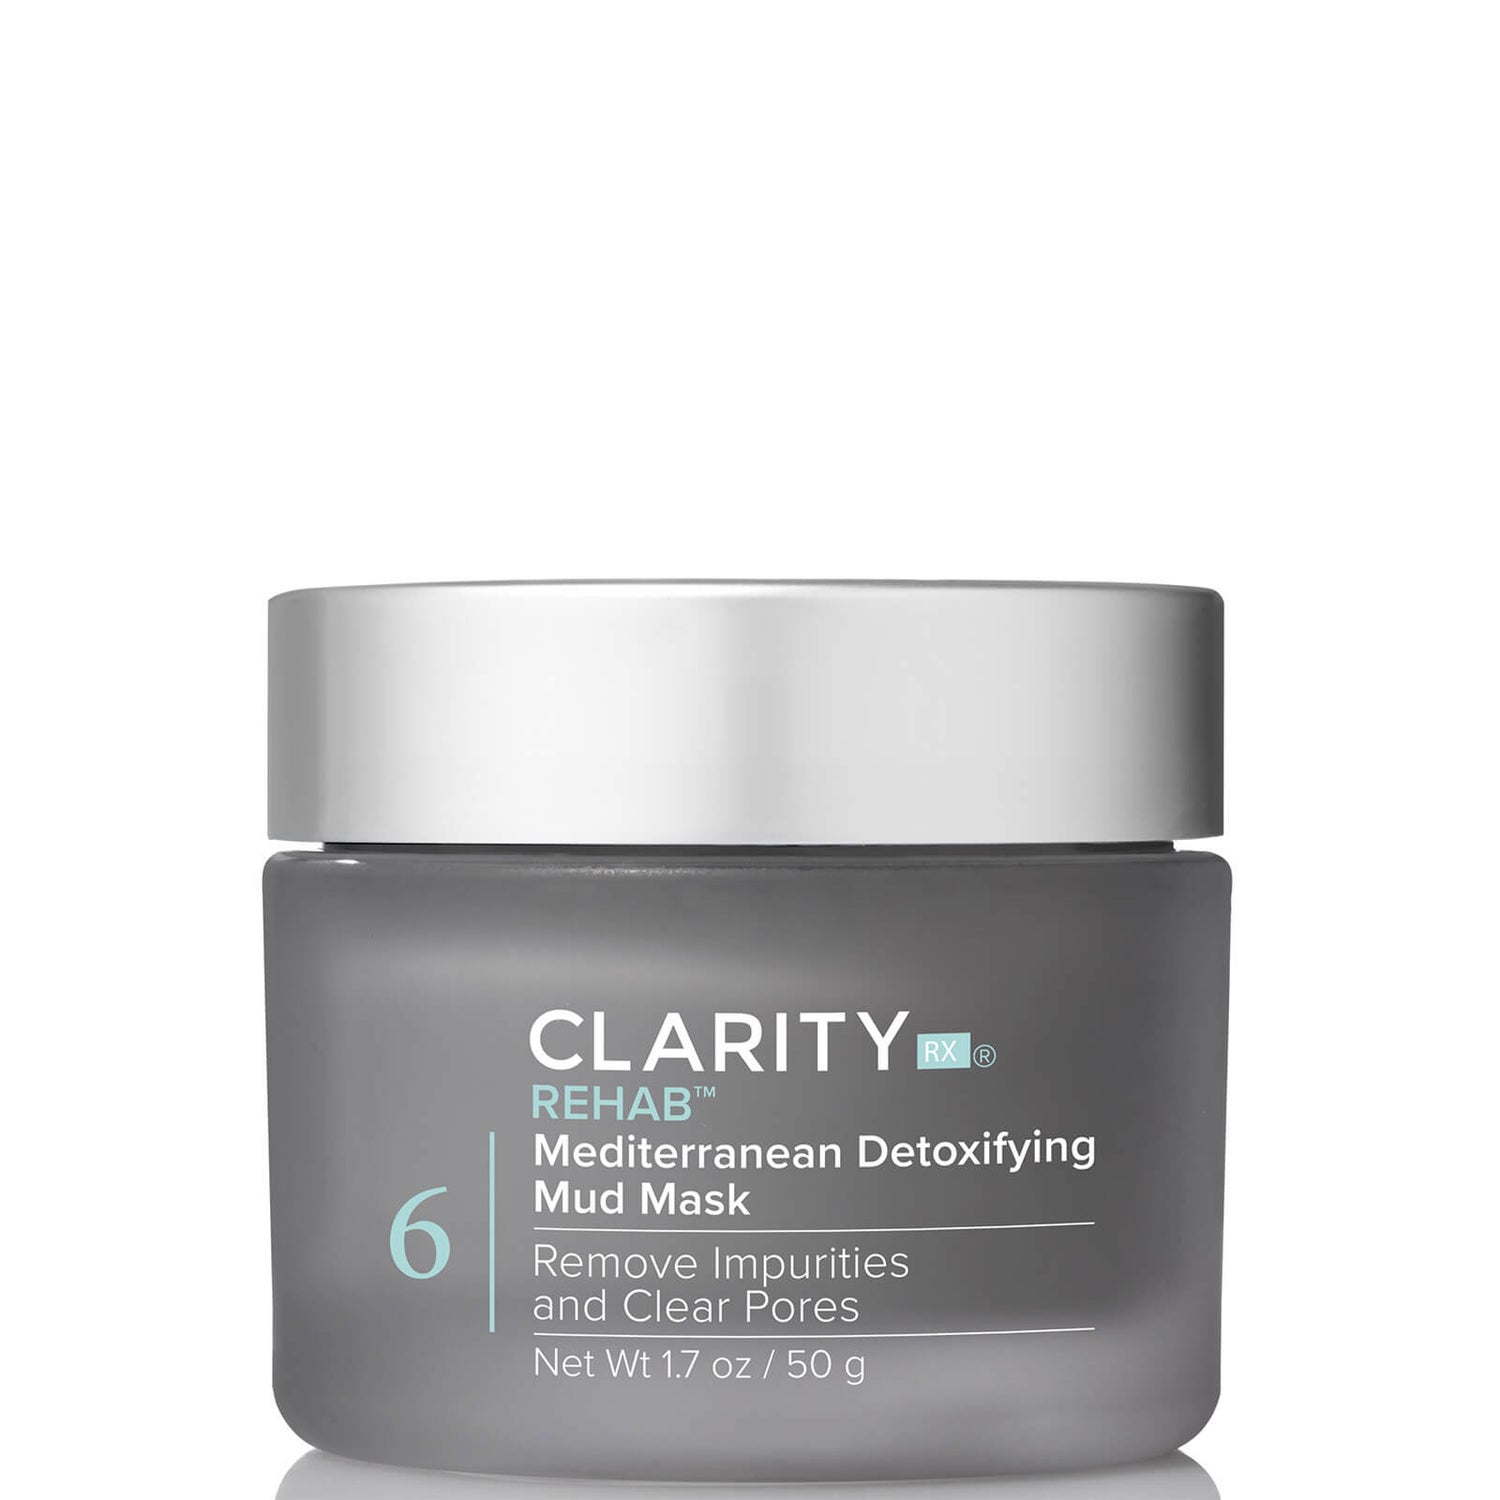 ClarityRx Rehab Mediterranean Detoxifying Mud Mask 1.7 oz.